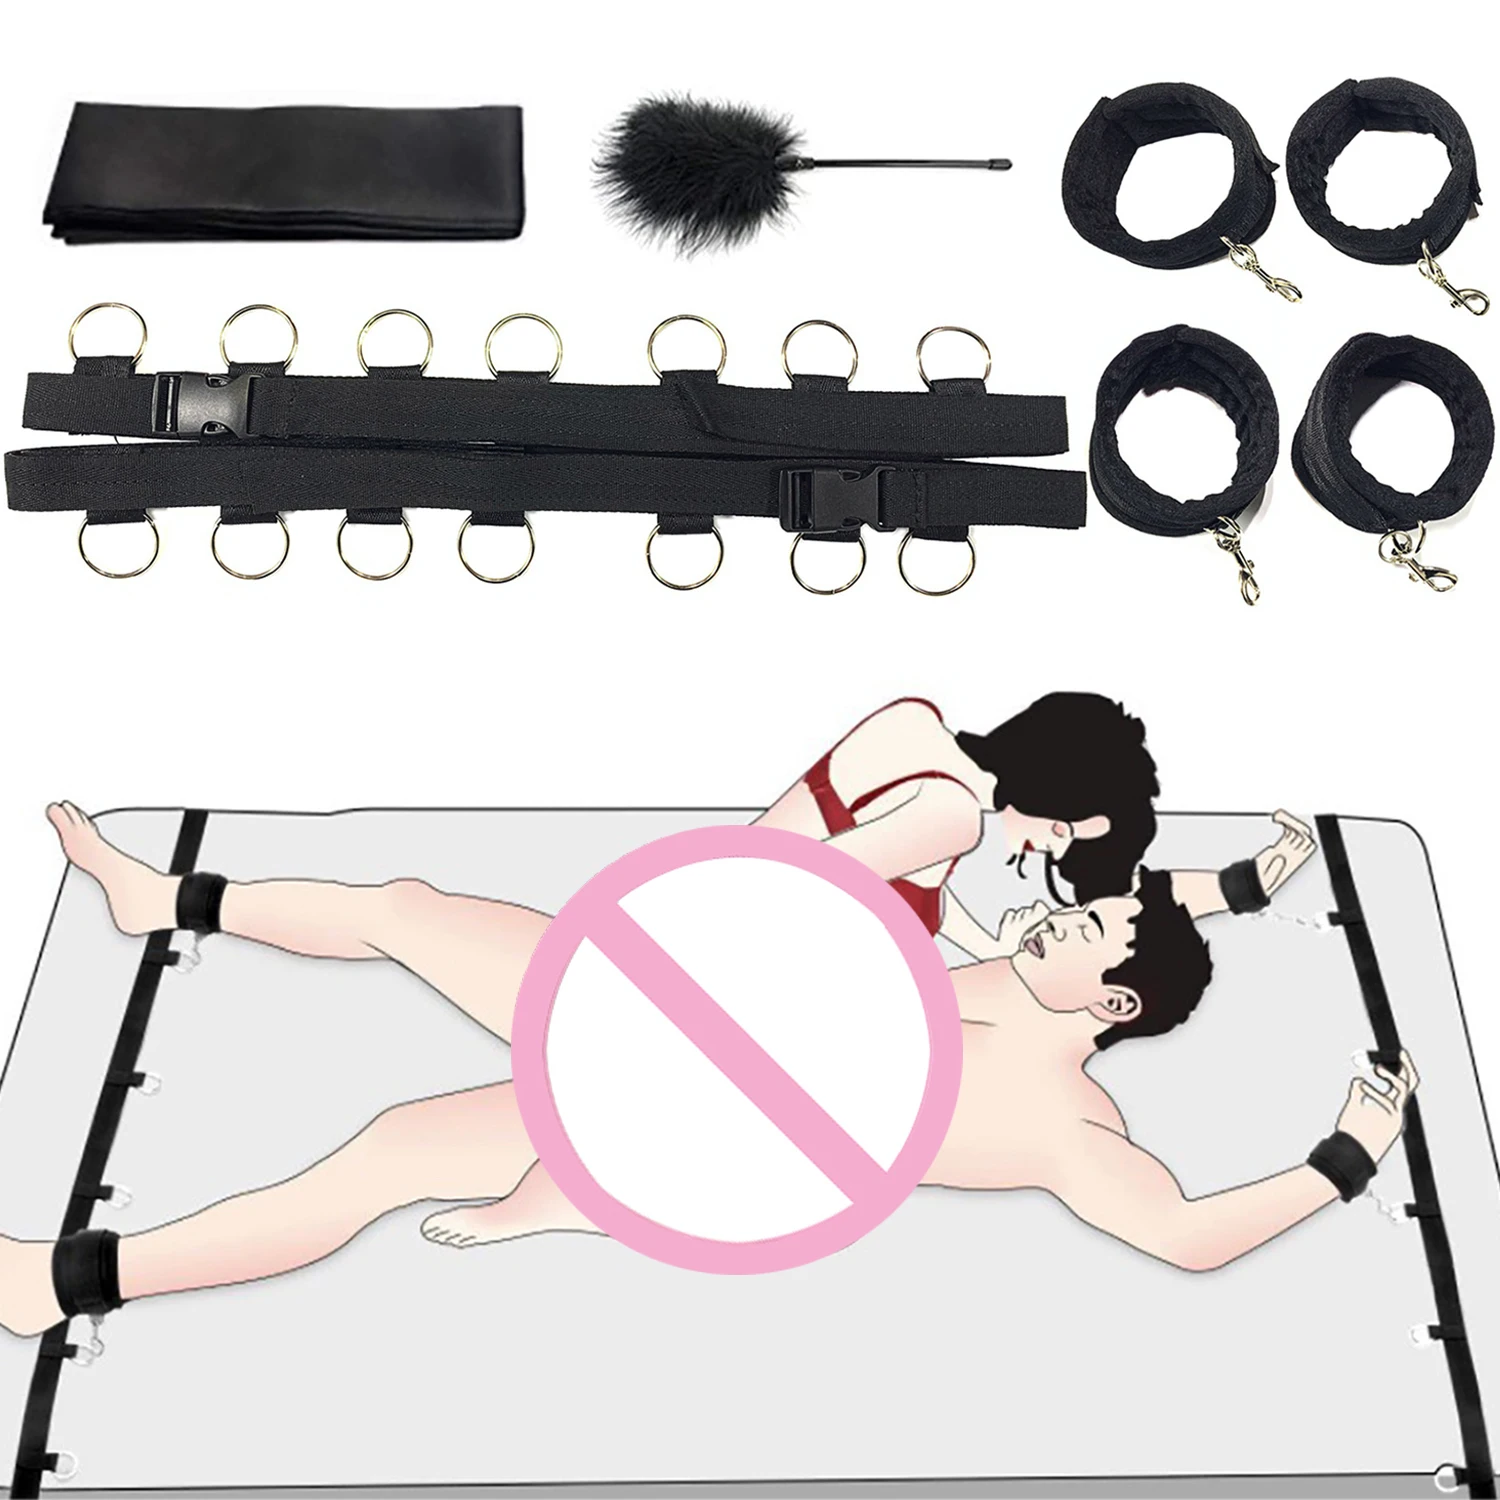 

Bed BDSM Bondage Restraints Handcuffs Open Legs Sex Bondage Set Couples Flirt Fetish Binding Limbs Slave Training Unisex Sex Toy